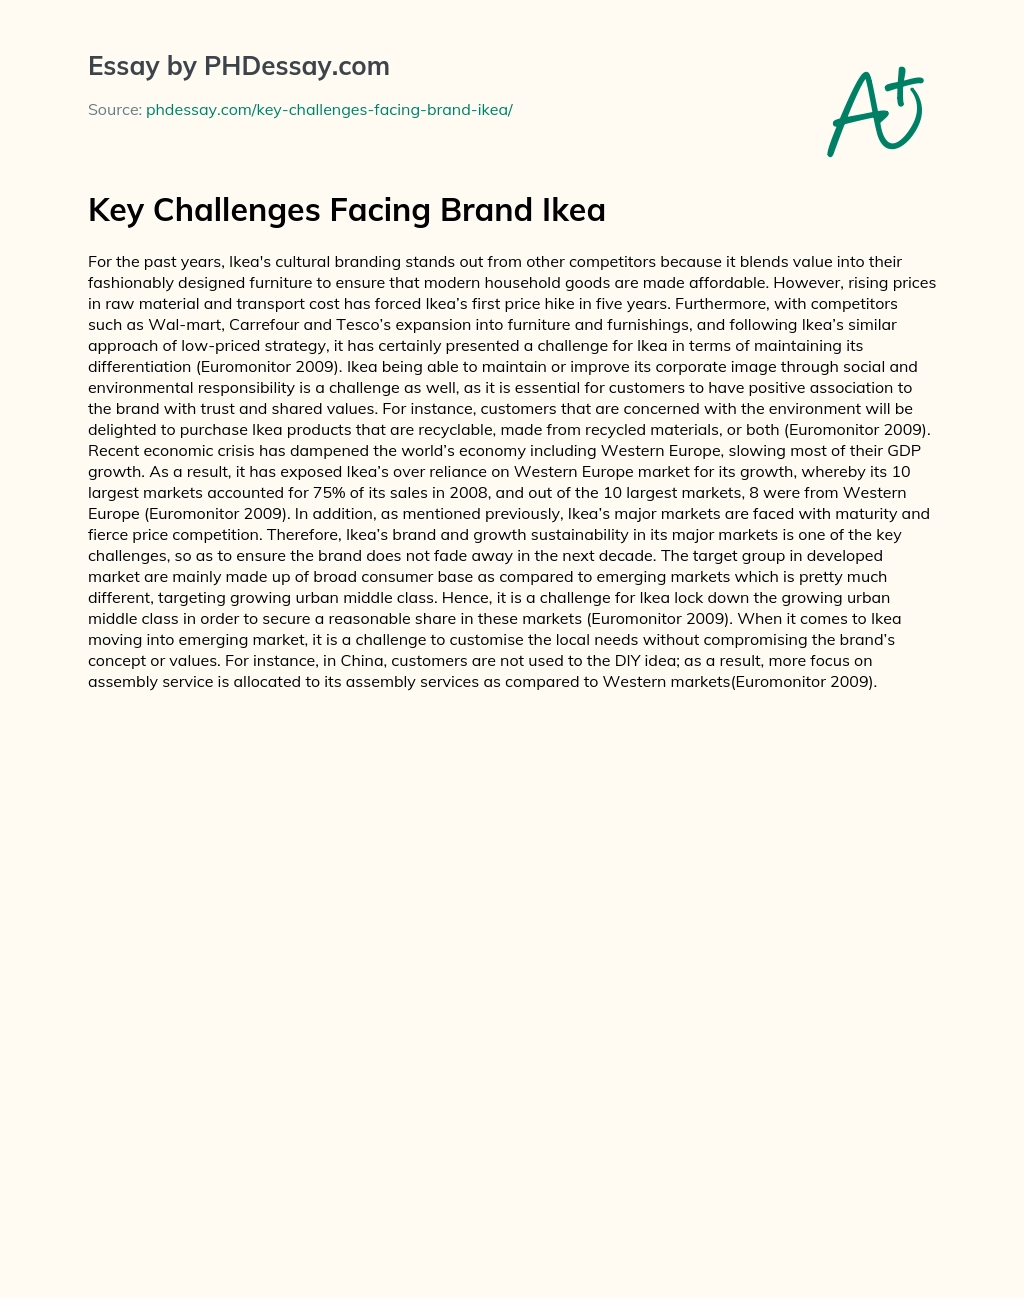 Key Challenges Facing Brand Ikea essay